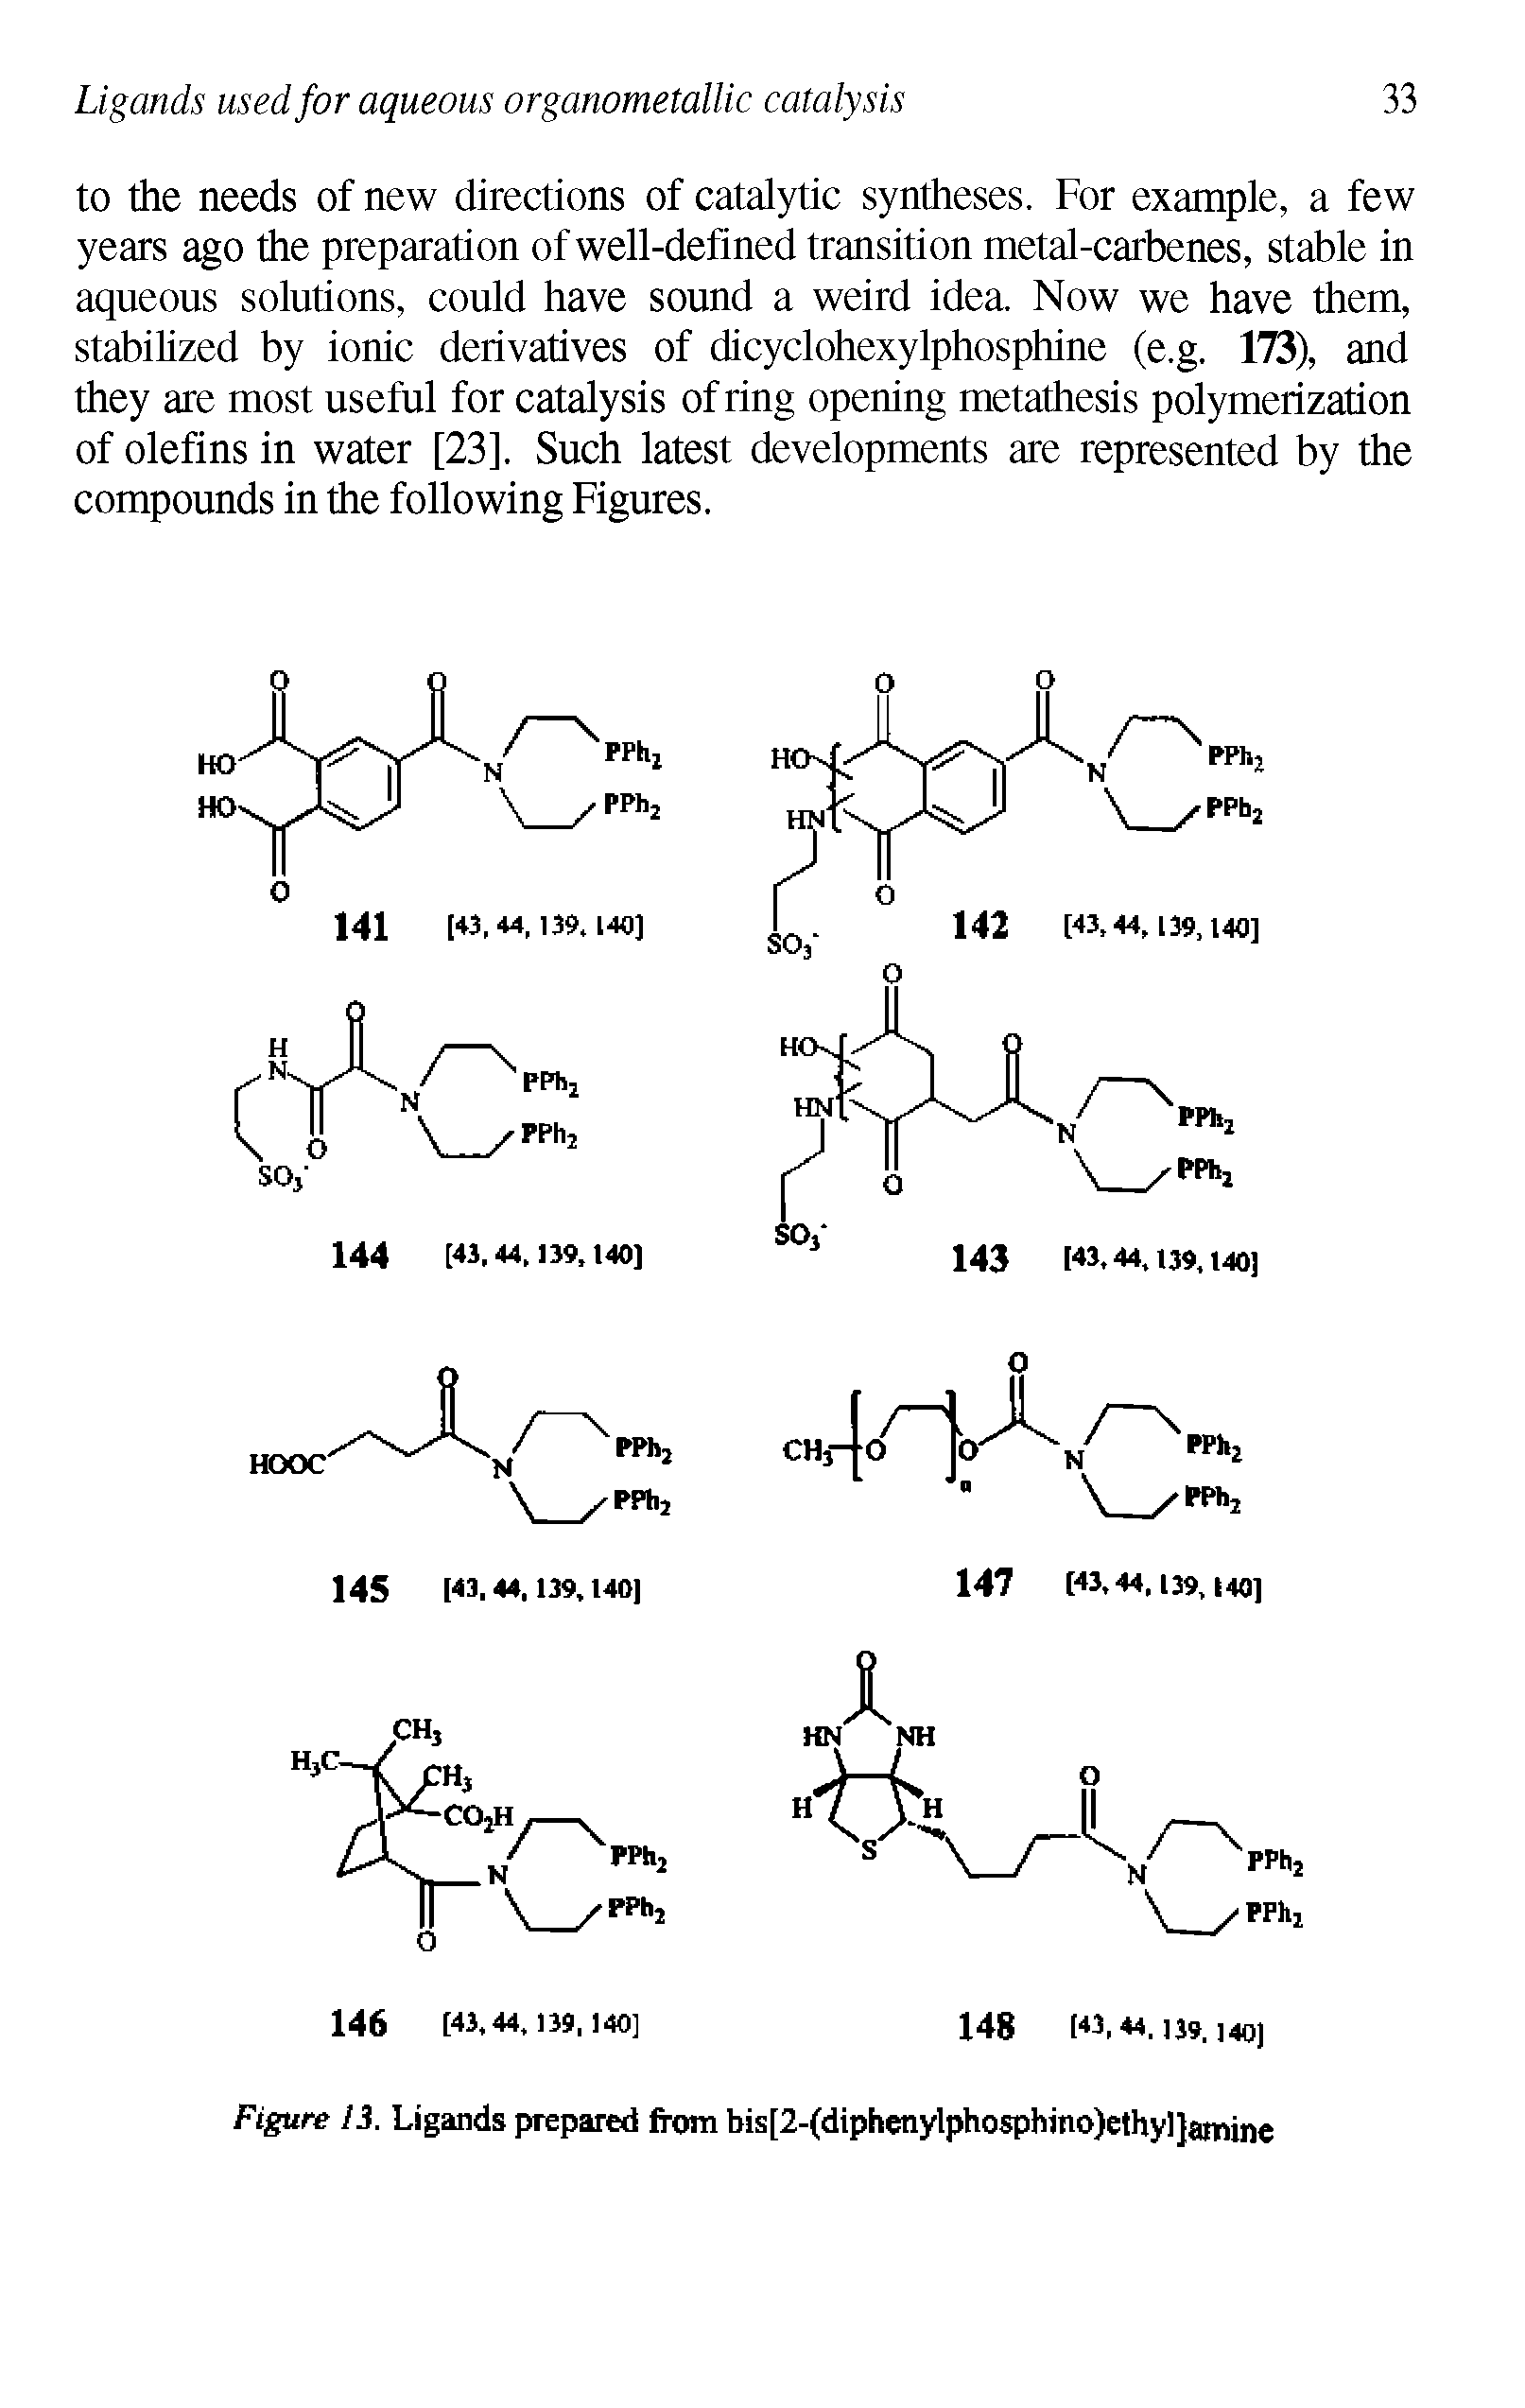 Figure 13. Ligands prepared from bis[2-(diphenylphosphino)cthyljamine...